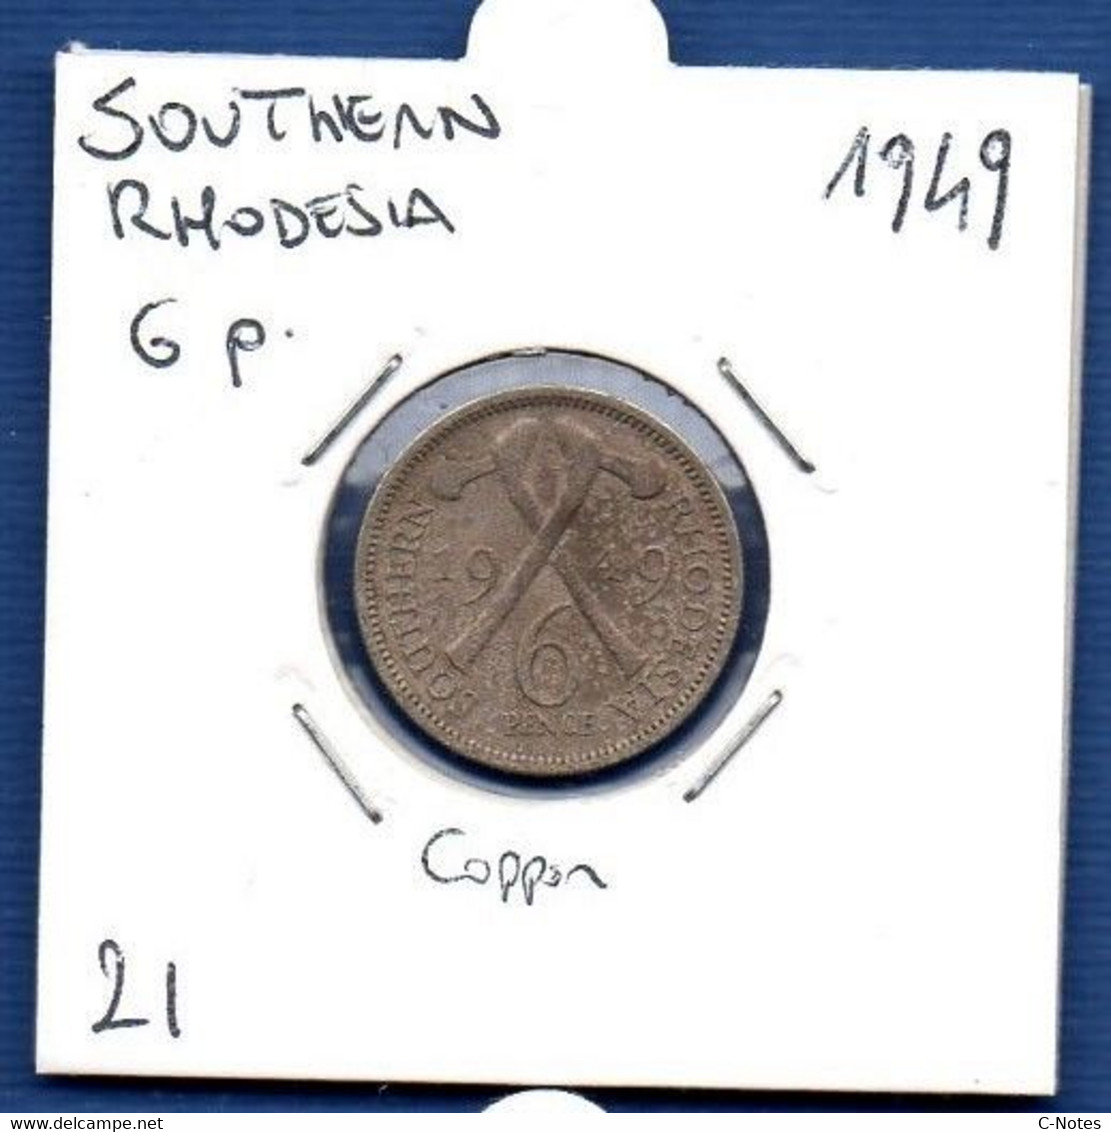 SOUTHERN RHODESIA - 6 Pence 1949  -  See Photos - Km 21 - Rhodésie